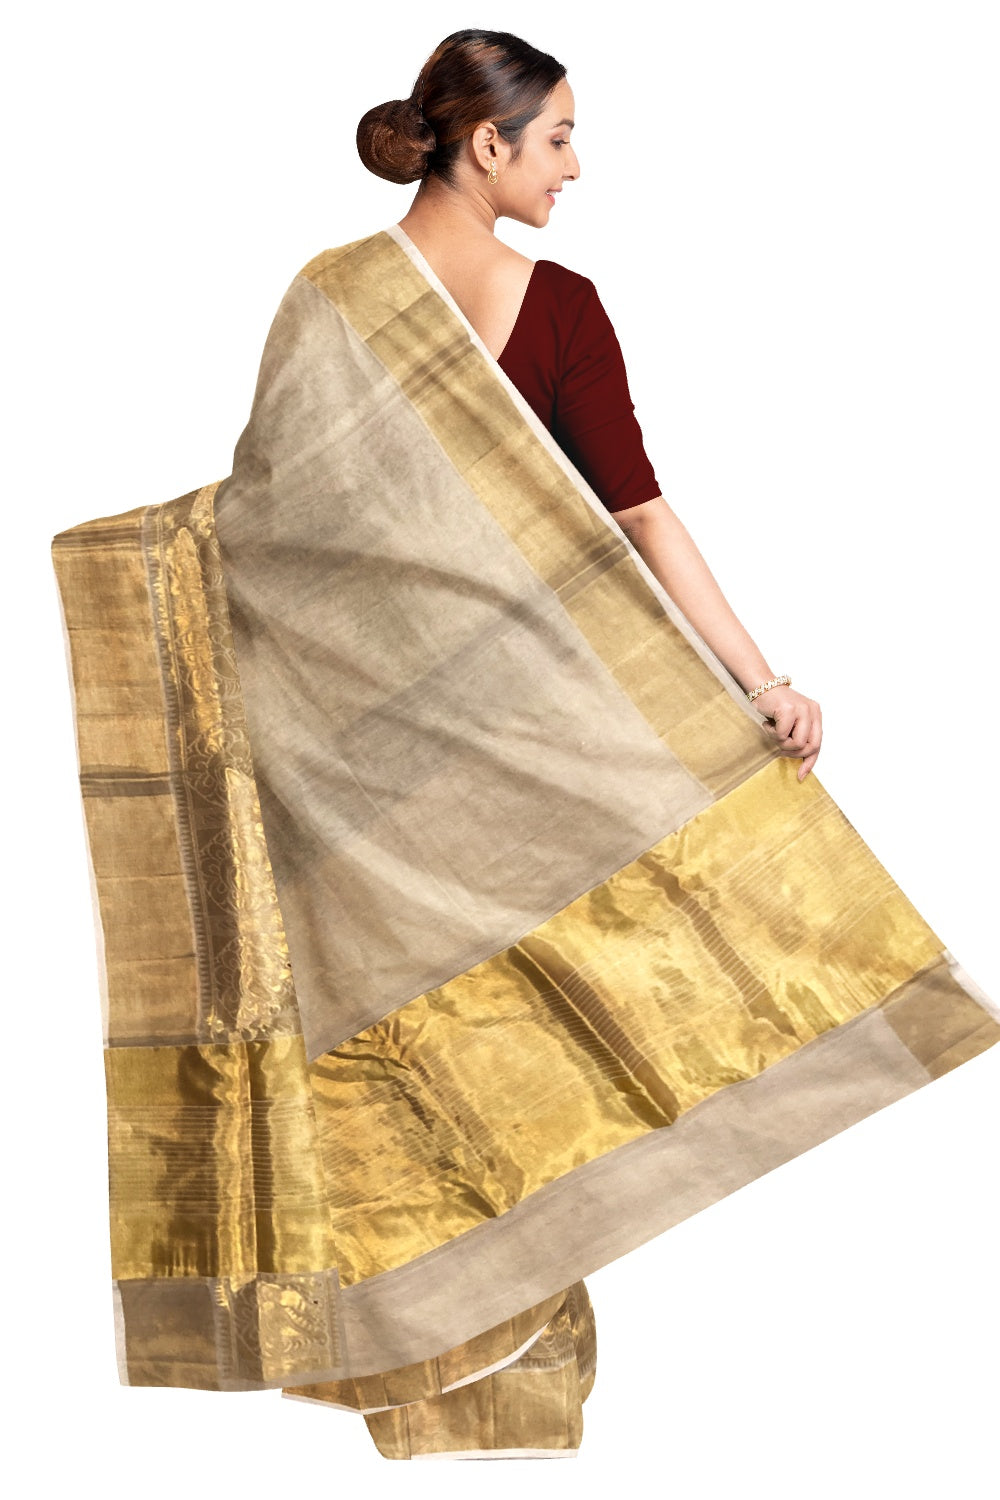 Southloom Balaramapuram Handloom Tissue Heavy Work Saree with 12 inch Pallu